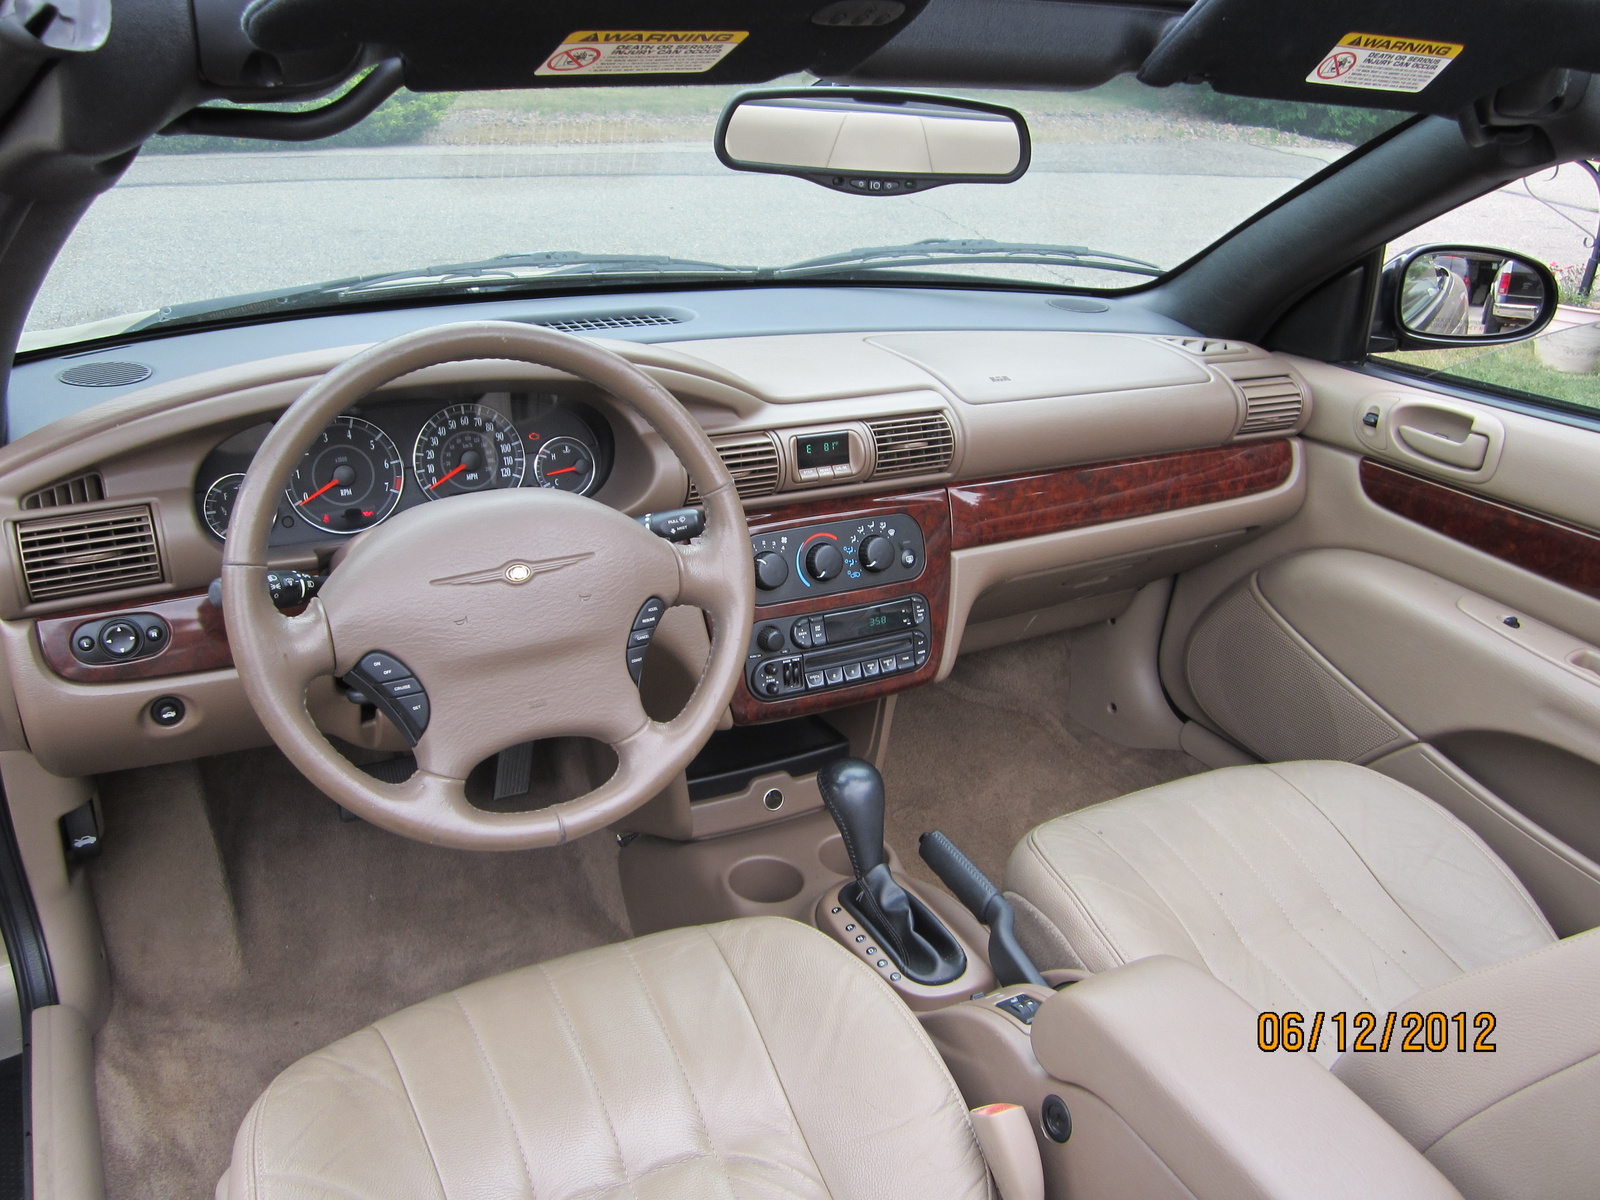 1999 Chrysler sebring convertible manual #1